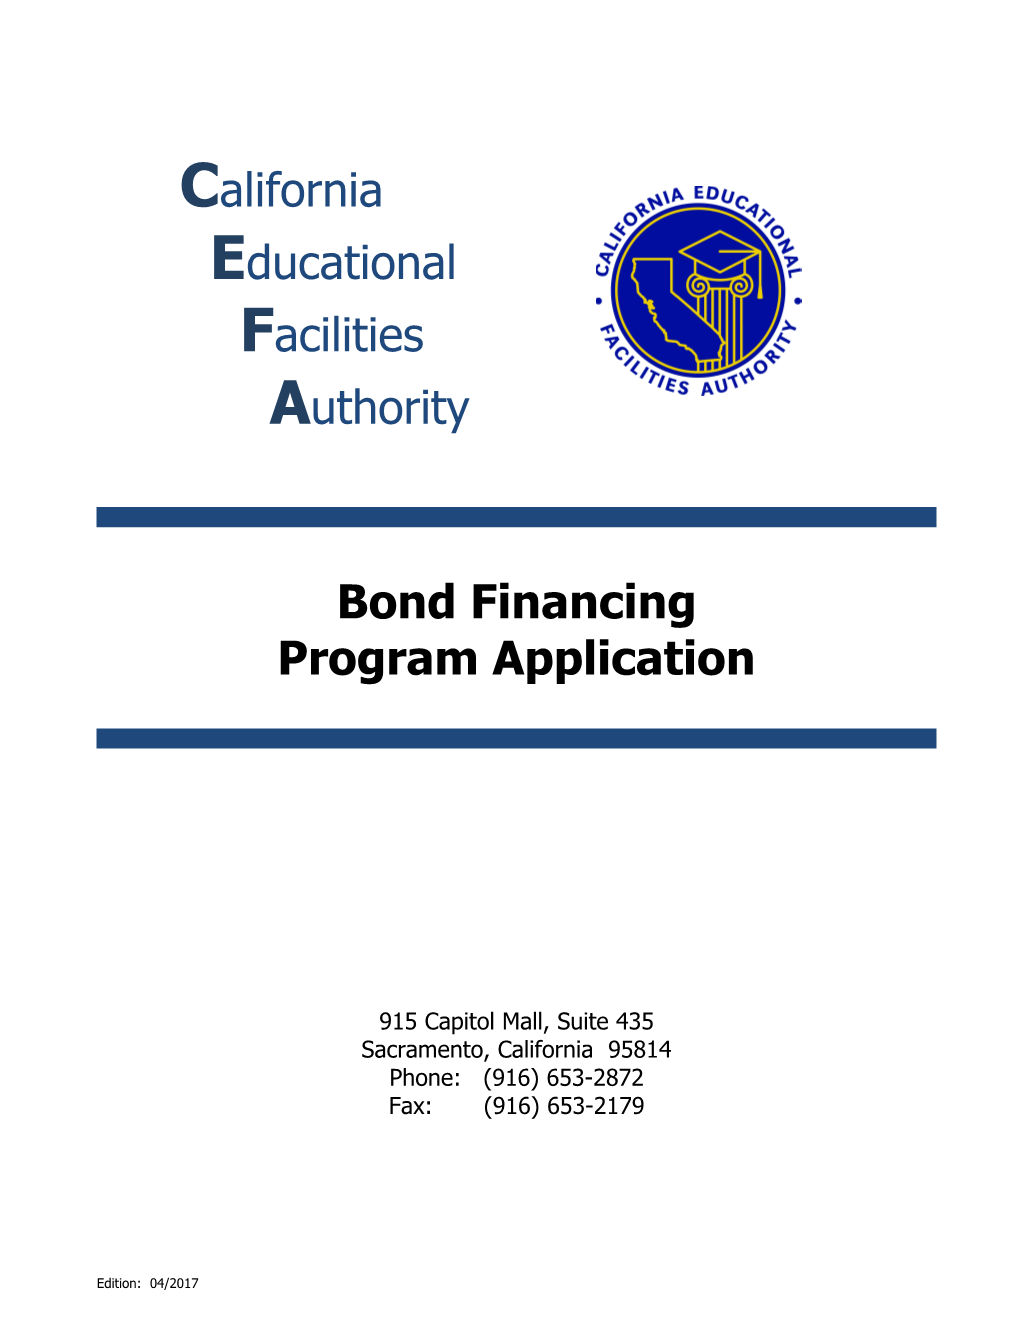 California Educational Facilities Authority (Cefa)